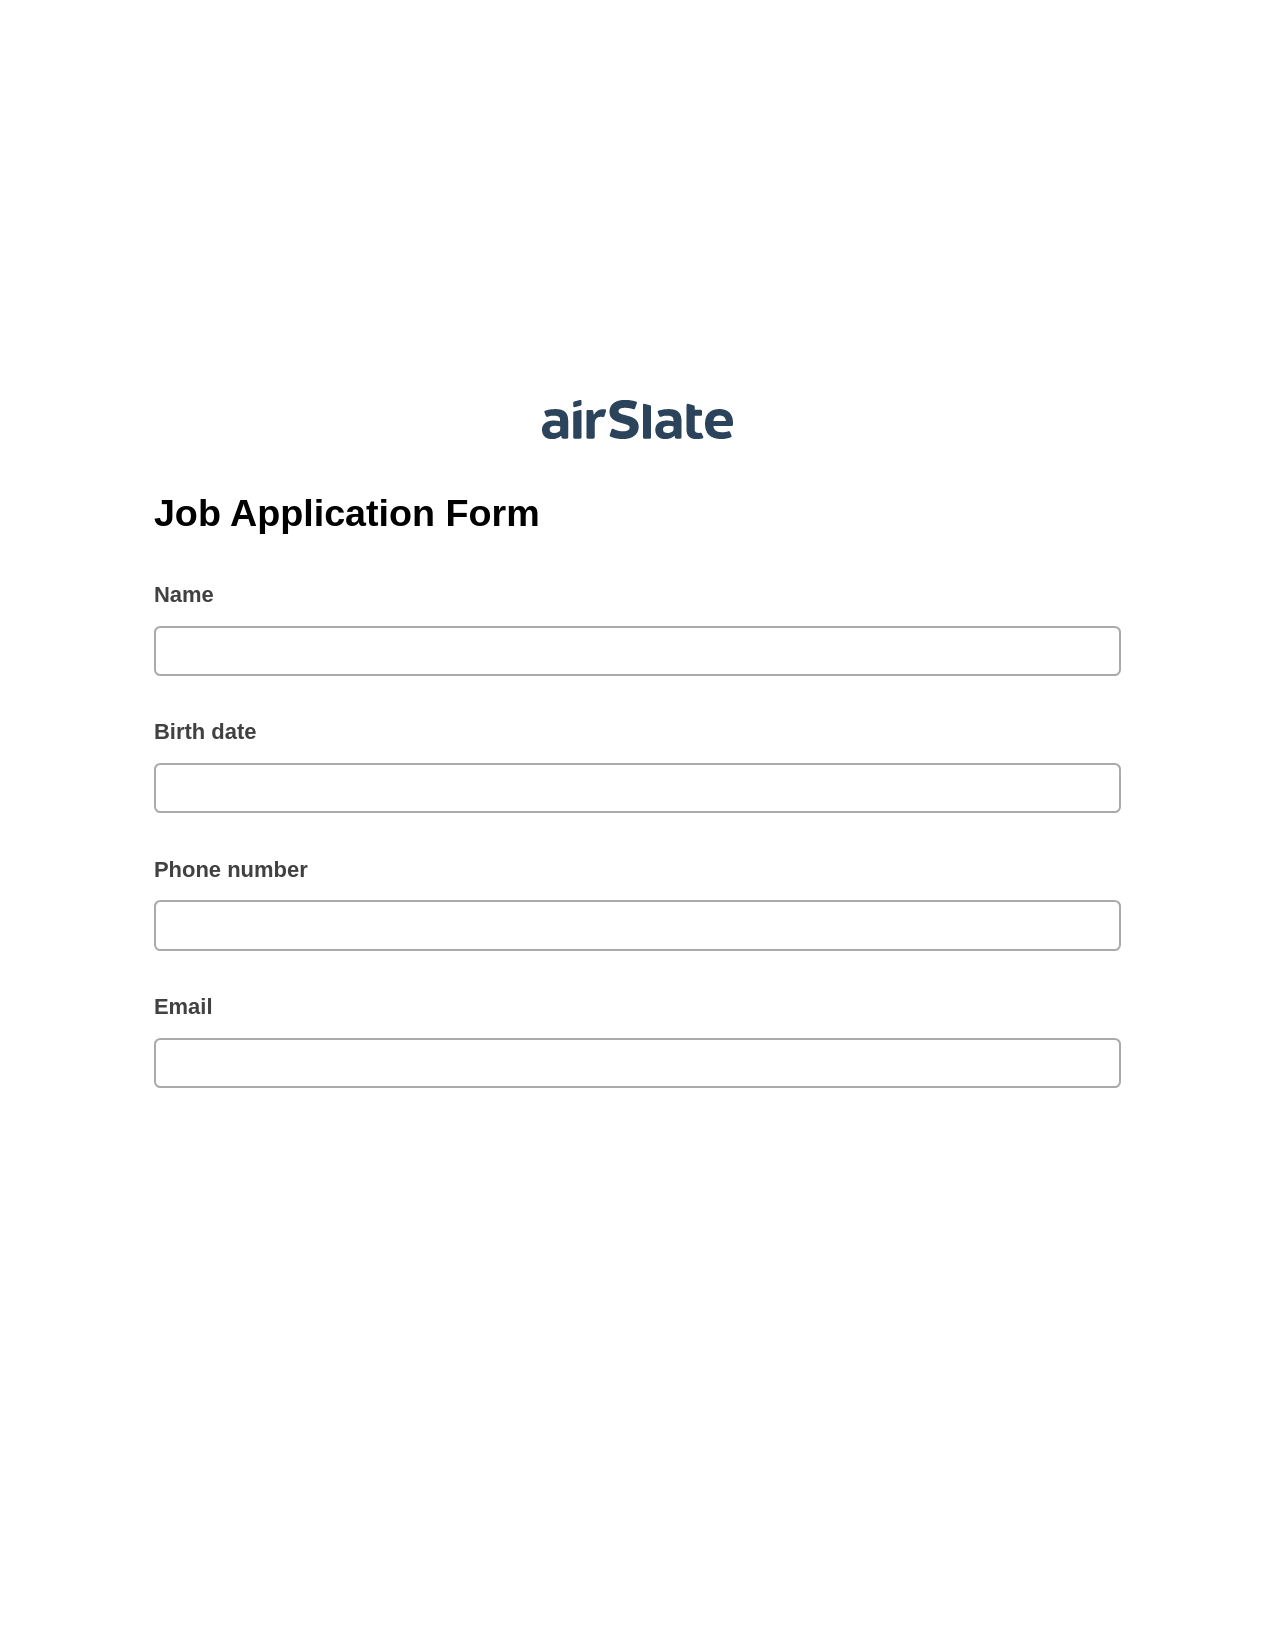 Multirole Job Application Form Pre-fill from MySQL Bot, Create MS Dynamics 365 Records Bot, Box Bot